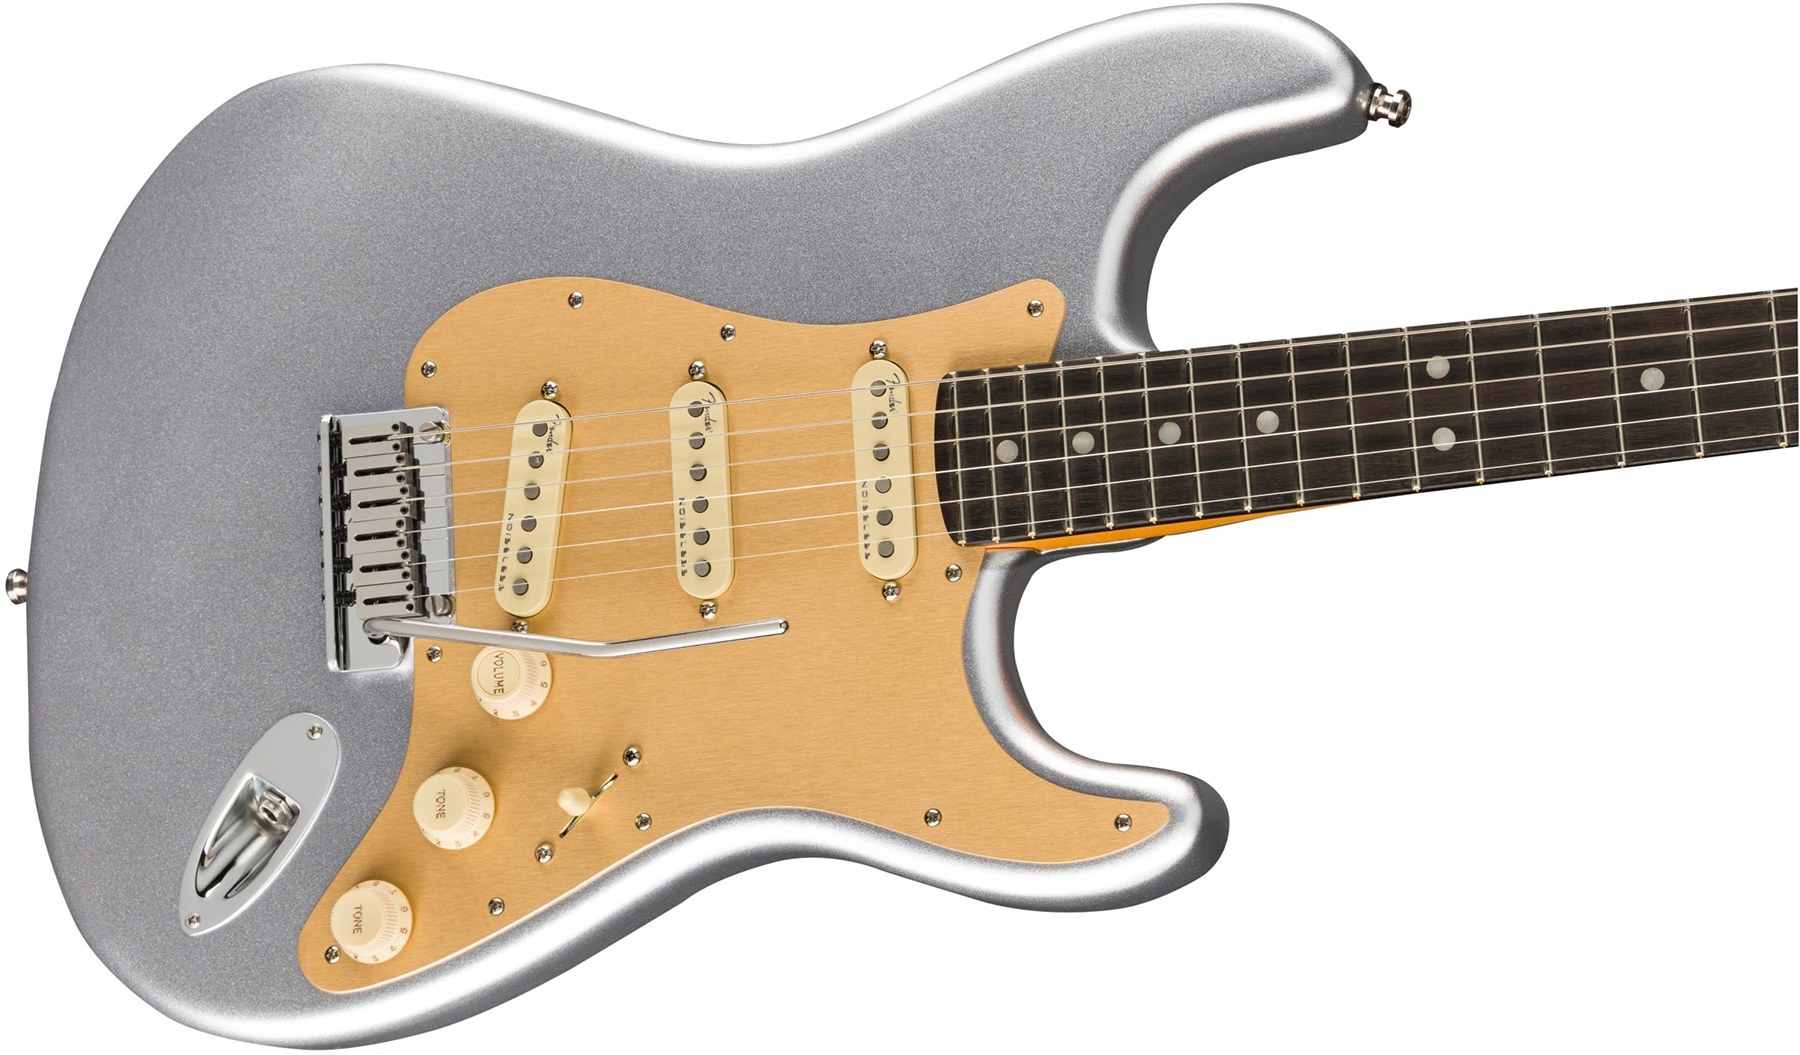 Fender Strat American Ultra Ltd Usa 3s Trem Eb - Quicksilver - Str shape electric guitar - Variation 2